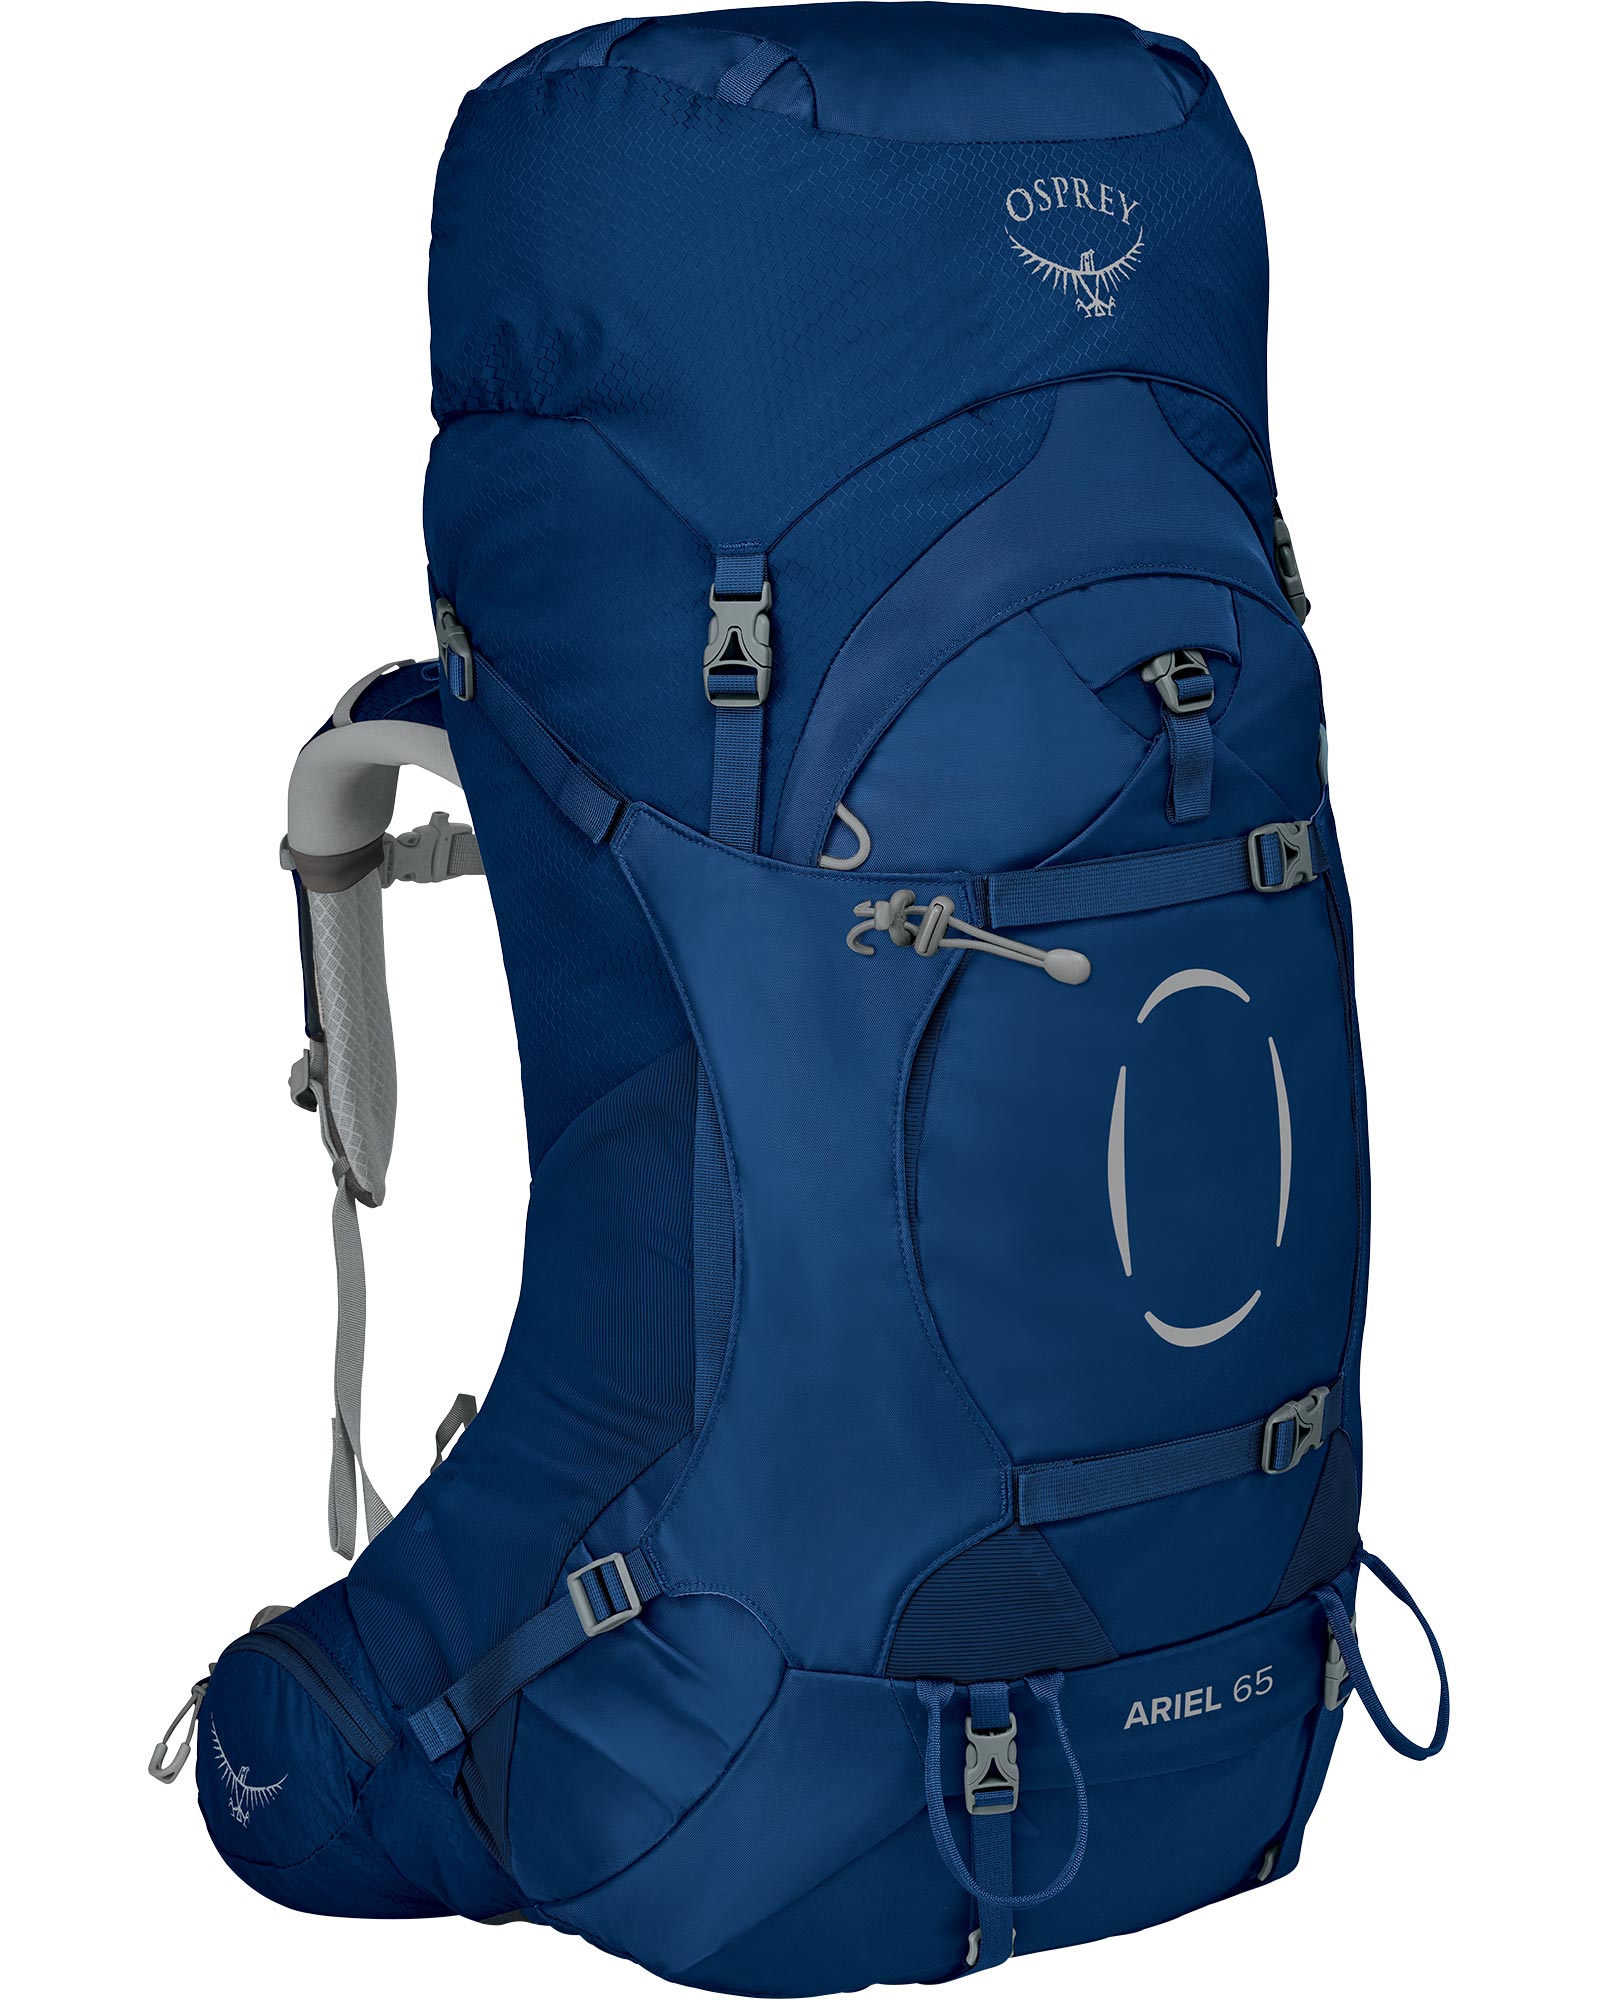 Osprey Ariel 65 Women’s Backpack - Ceramic Blue M/L